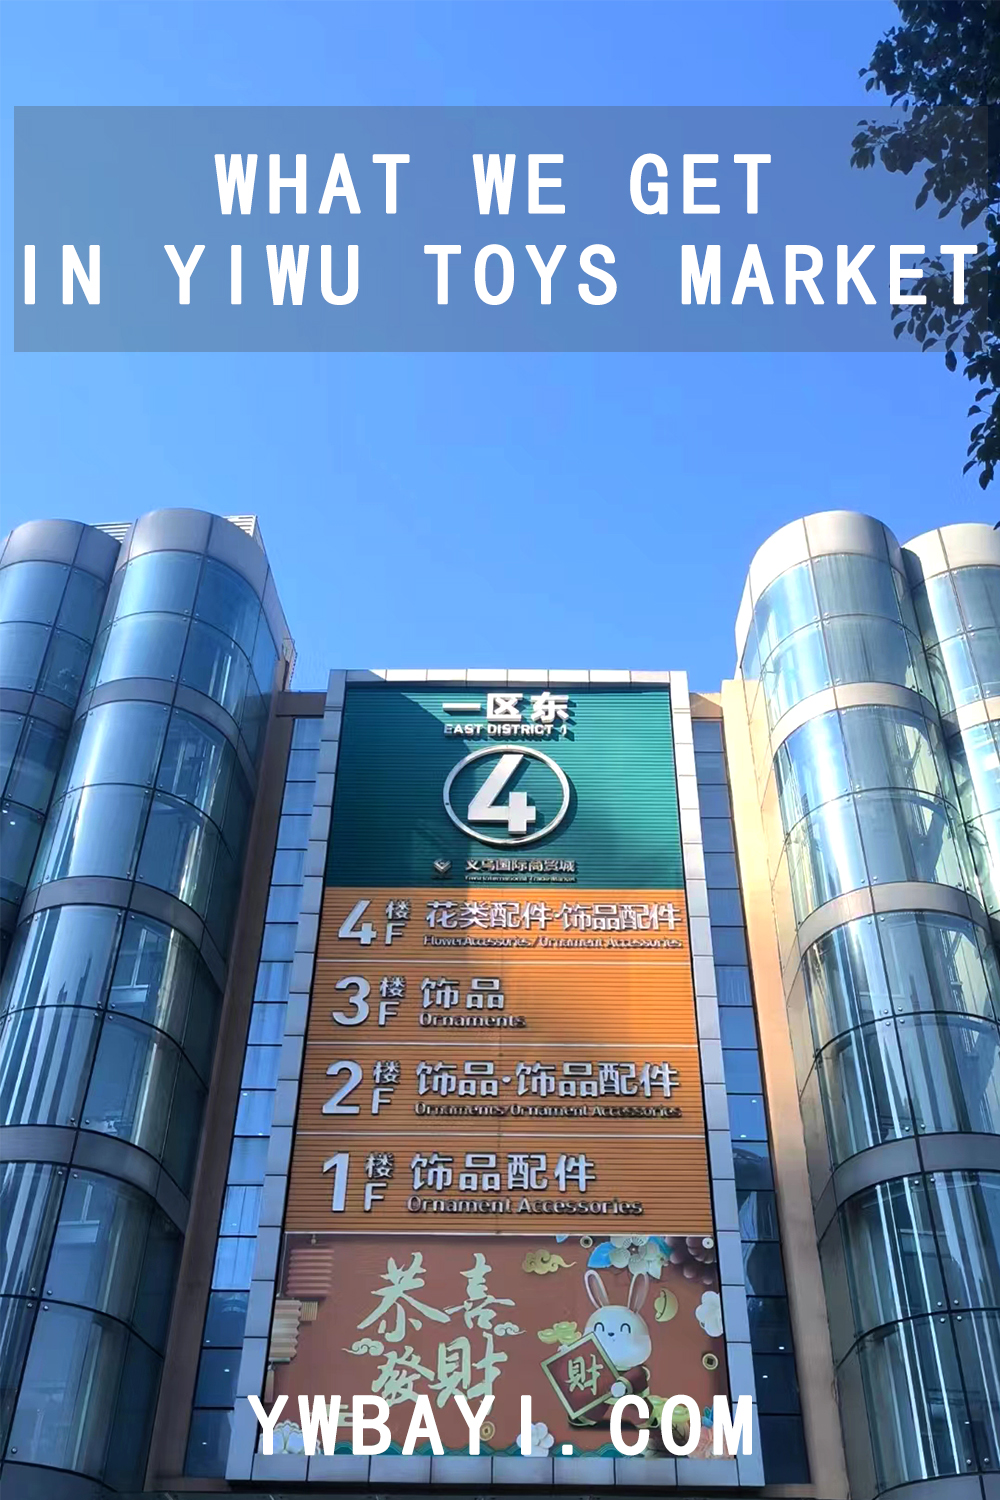 Toys in yiwu market